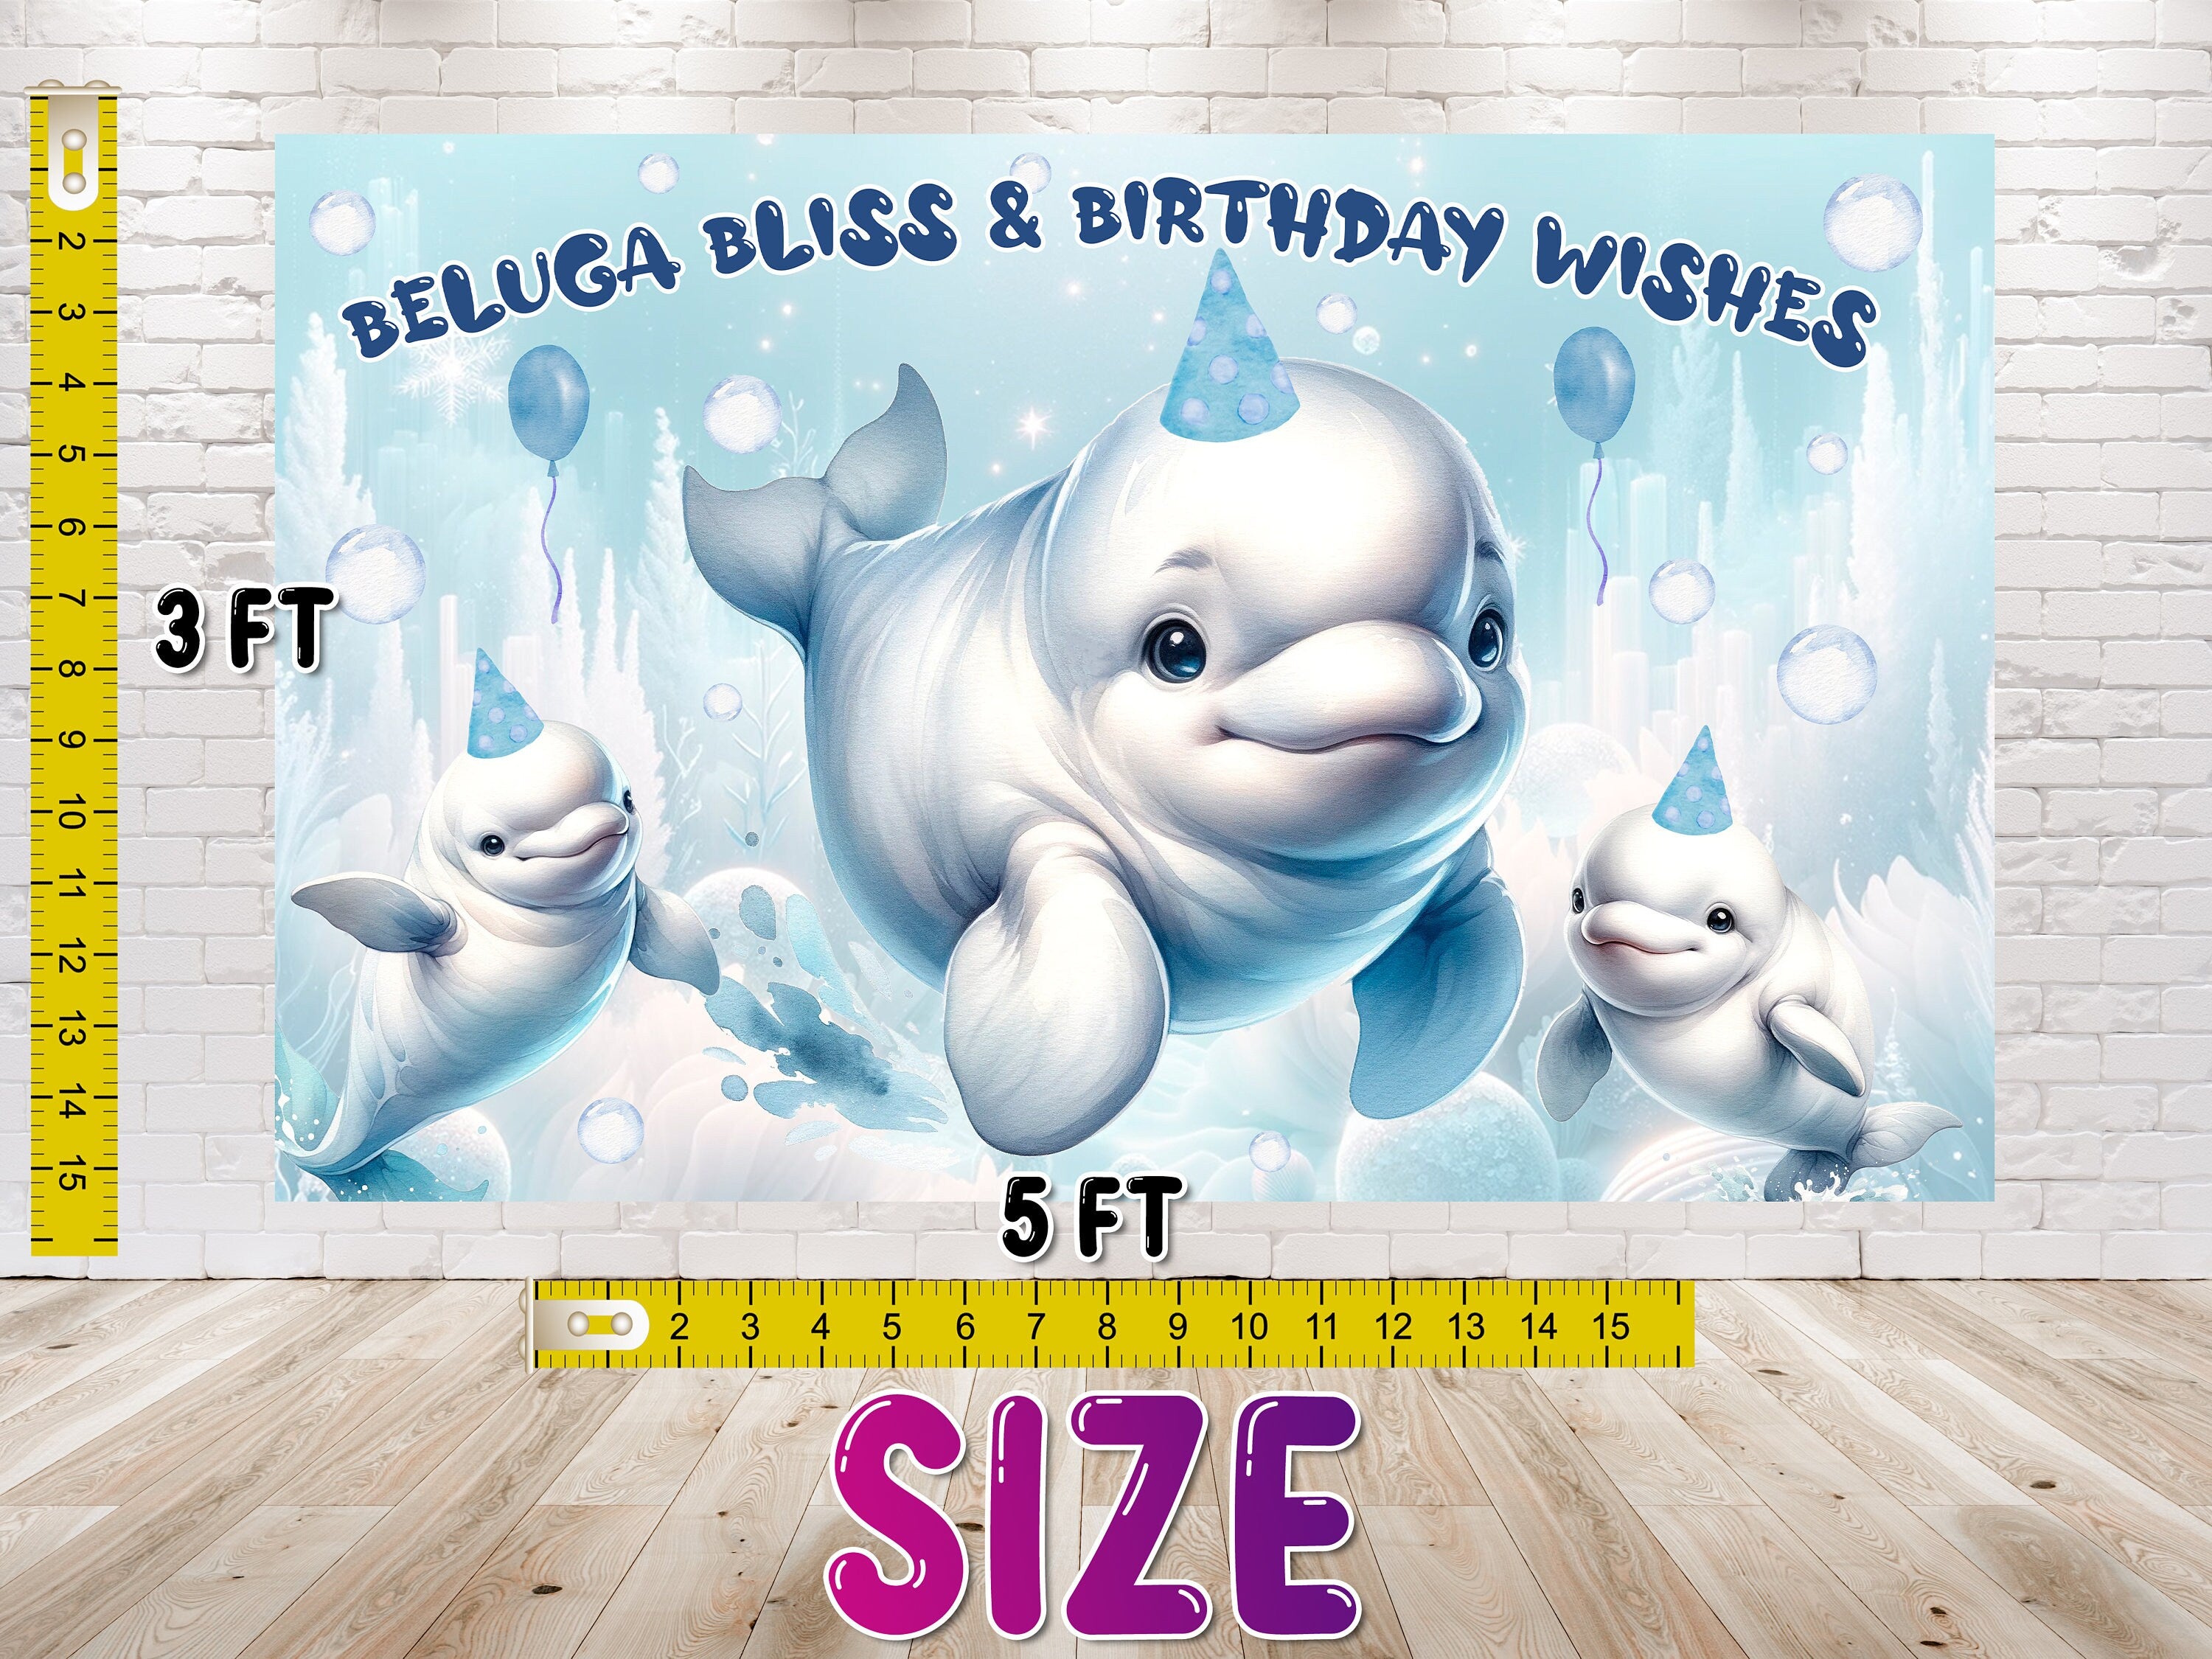 "Beluga Bliss & Birthday Wishes" - Birthday Backdrop 5x3 FT